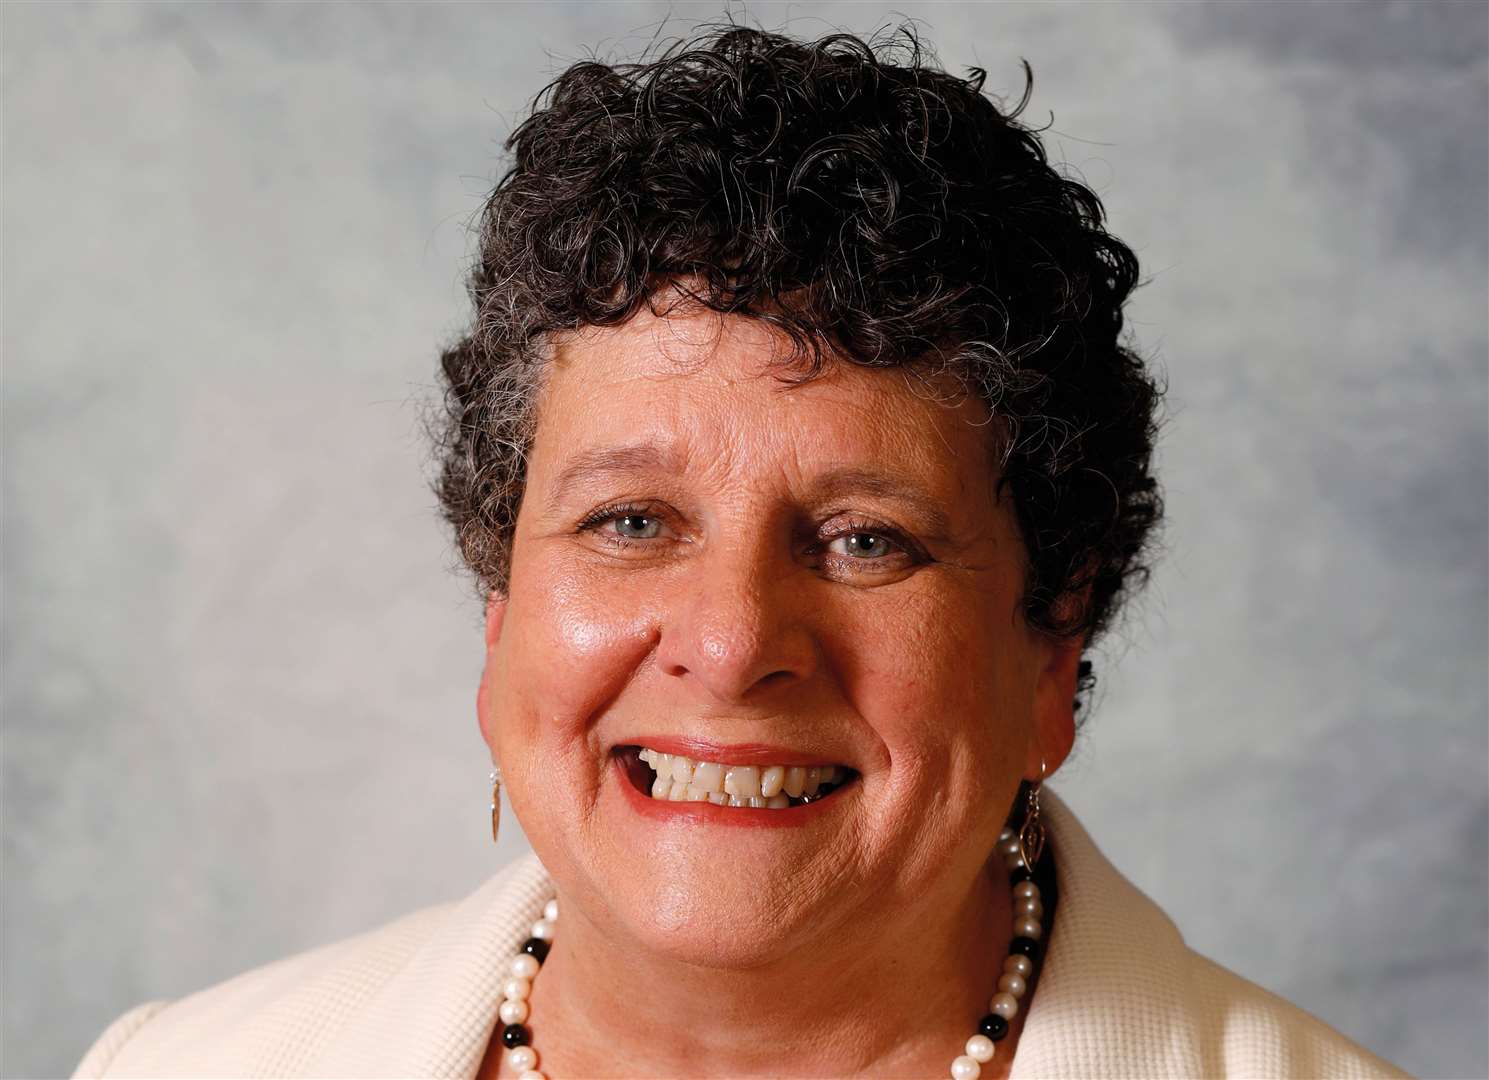 Cllr Teresa Murray, portfolio holder for public health